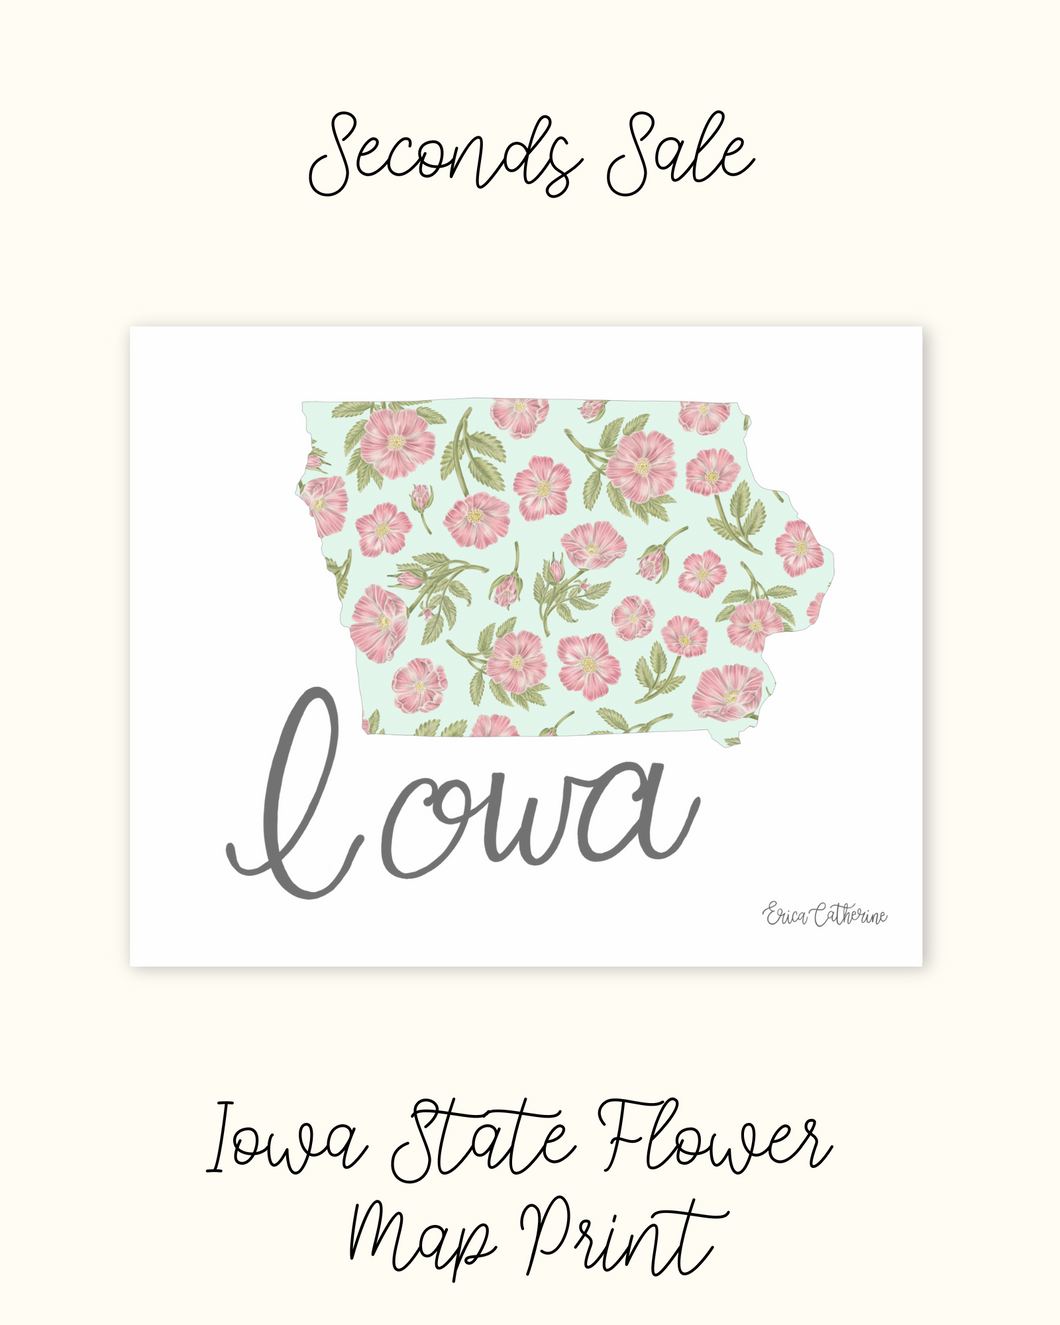 Iowa State Flower Map Print - Seconds Sale